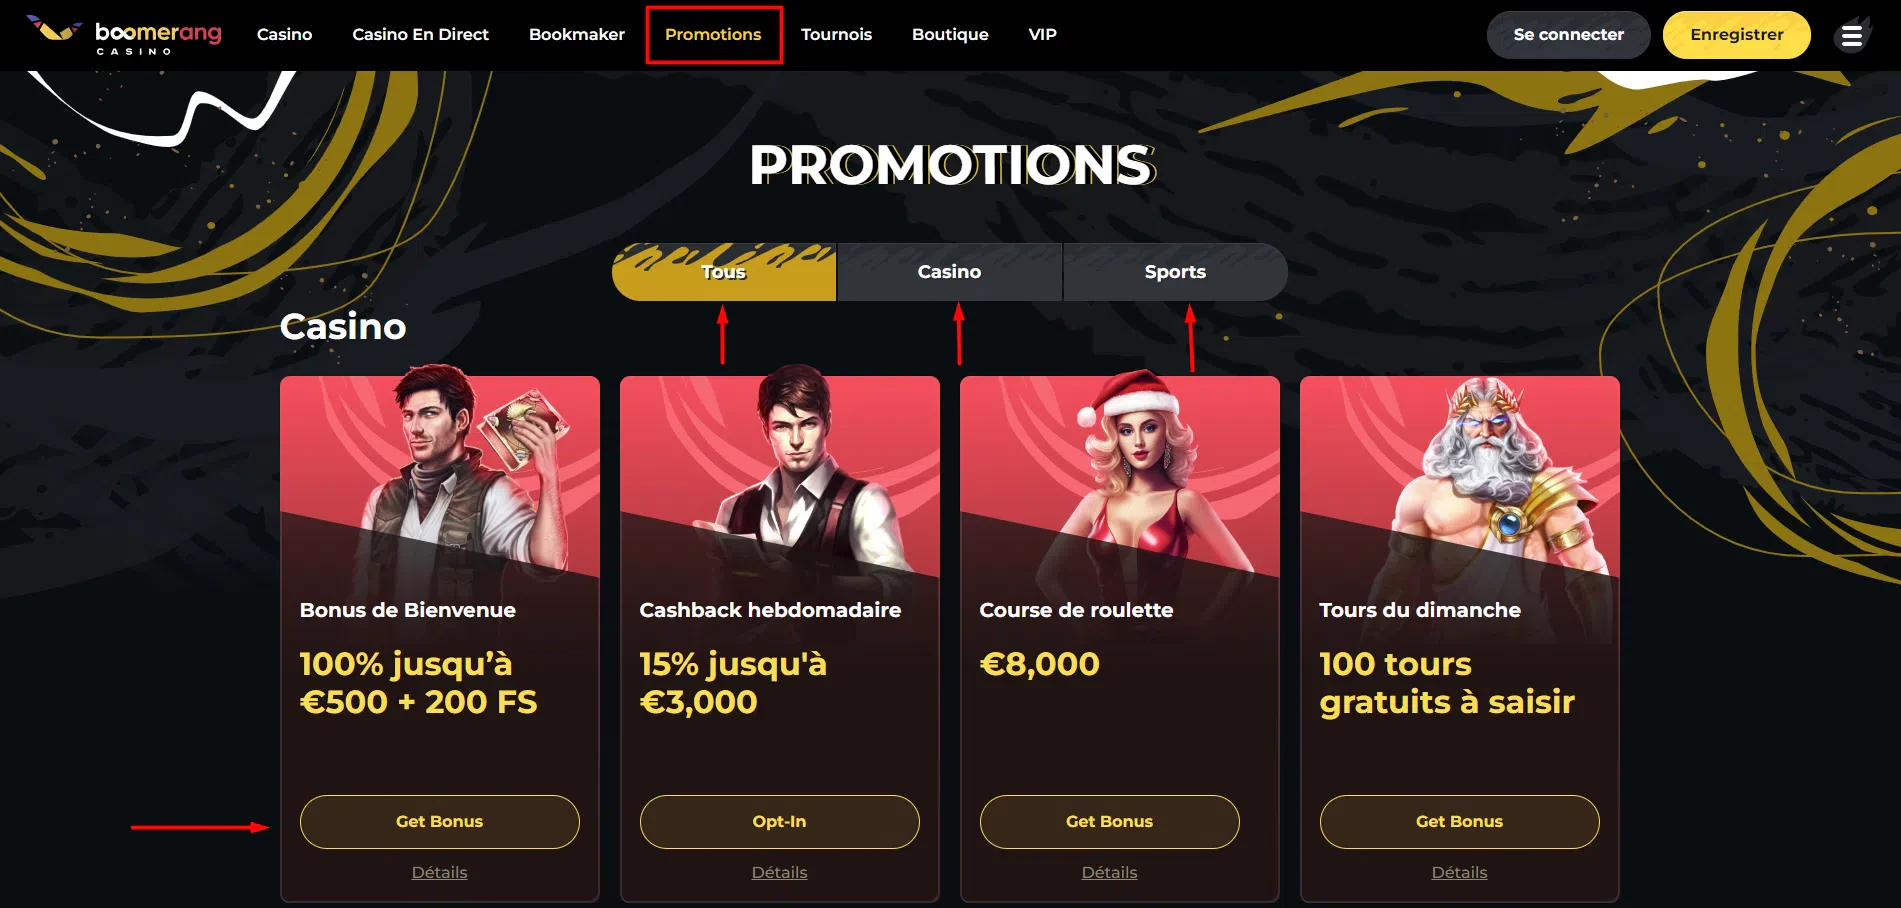 Page promotion Boomerang Casino